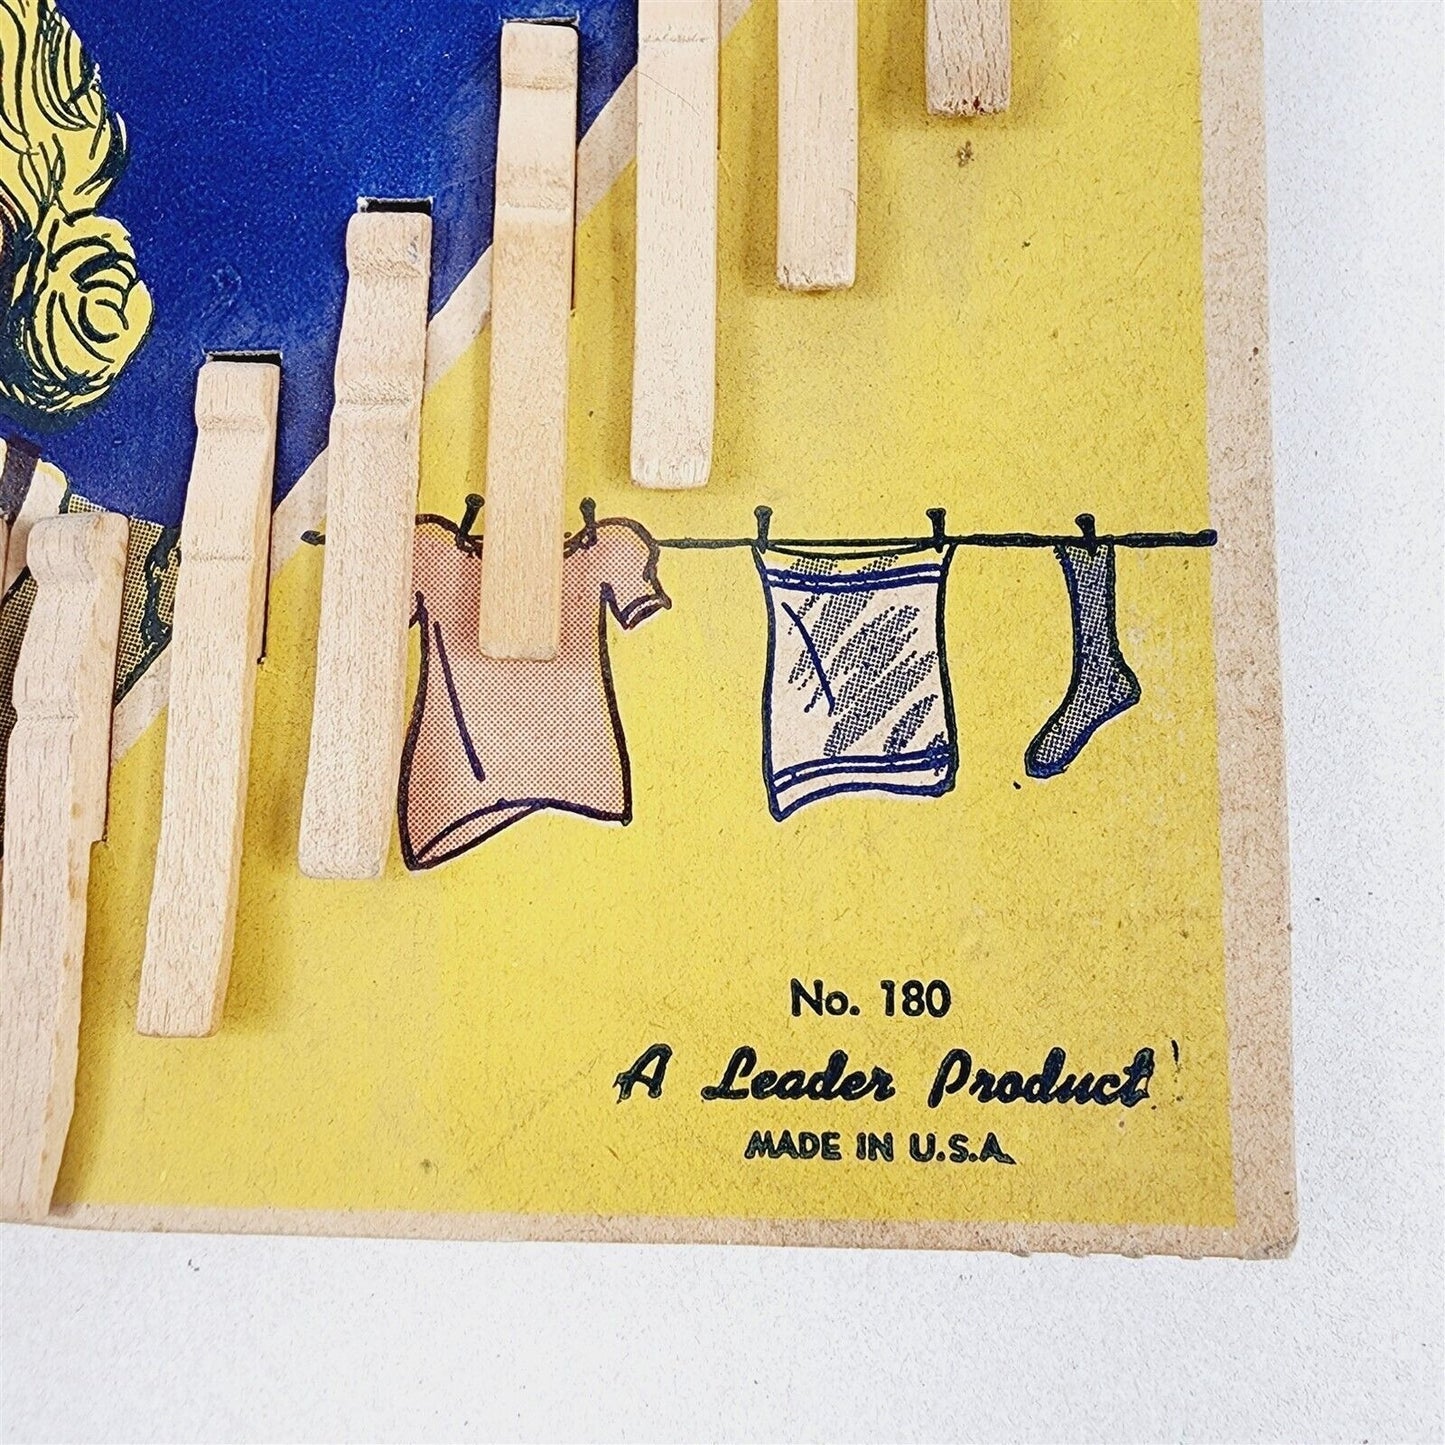 Vintage Dolly Pins 18 Wood Clothes Pins Clothespins Original Card No. 180 - #2